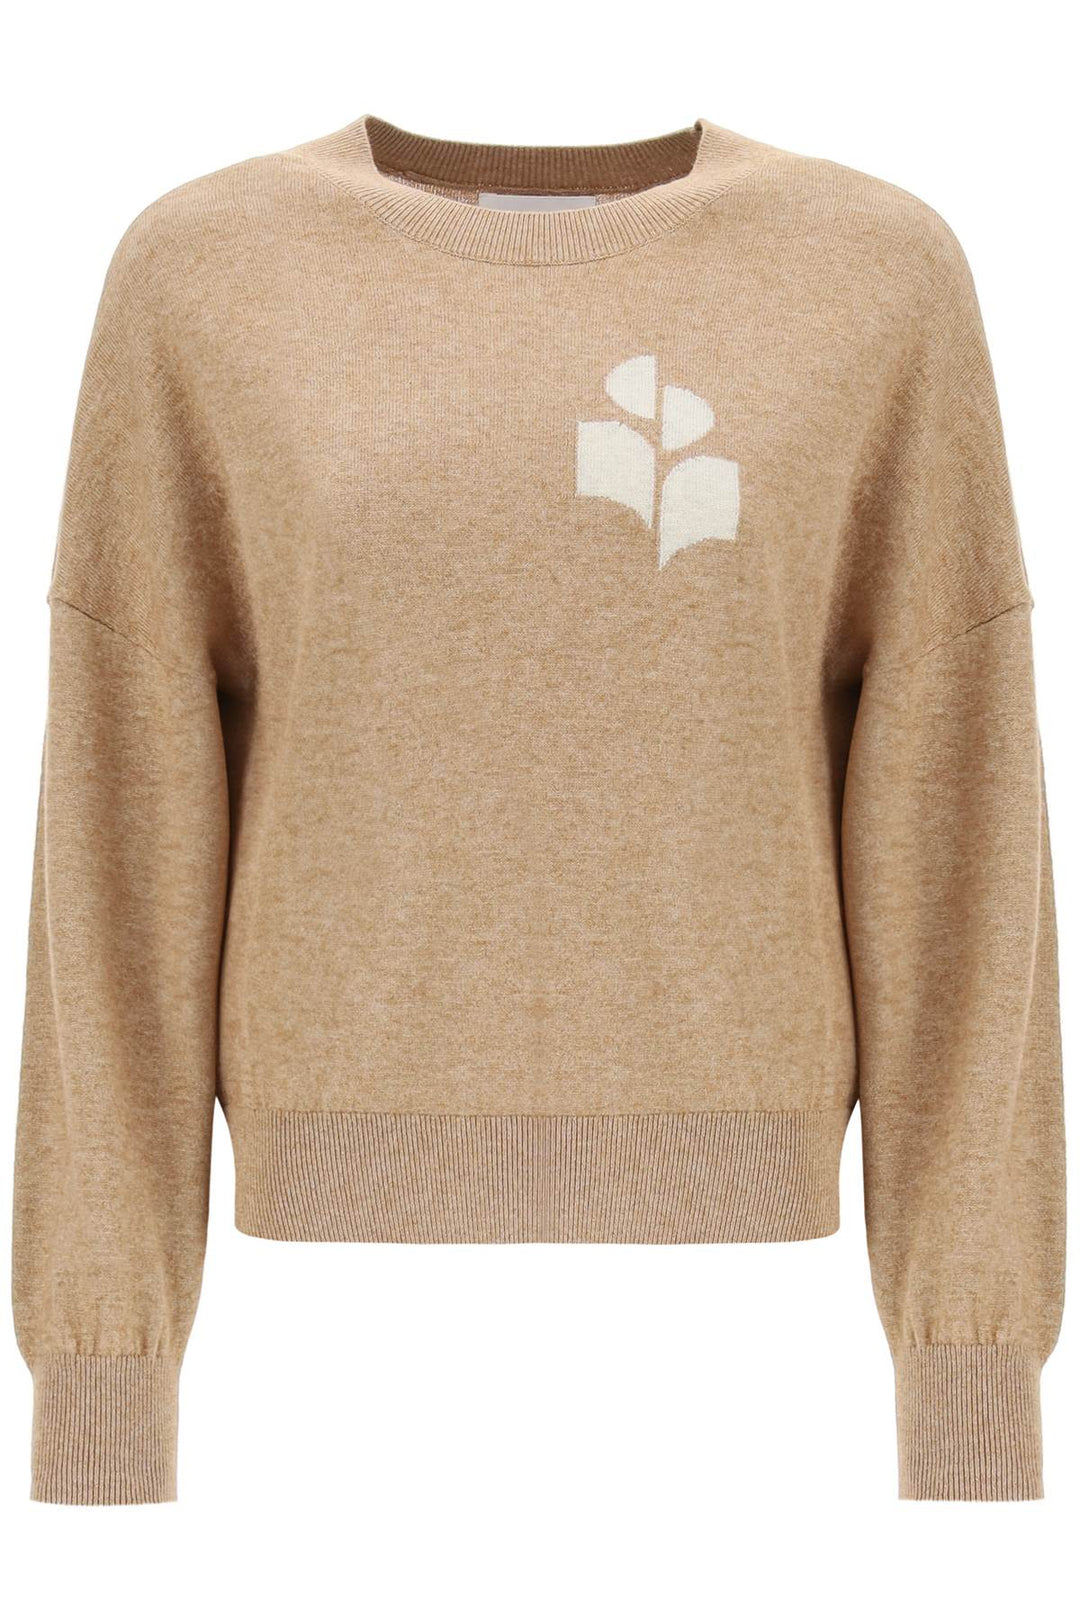 marisans sweater with logo intarsia-0